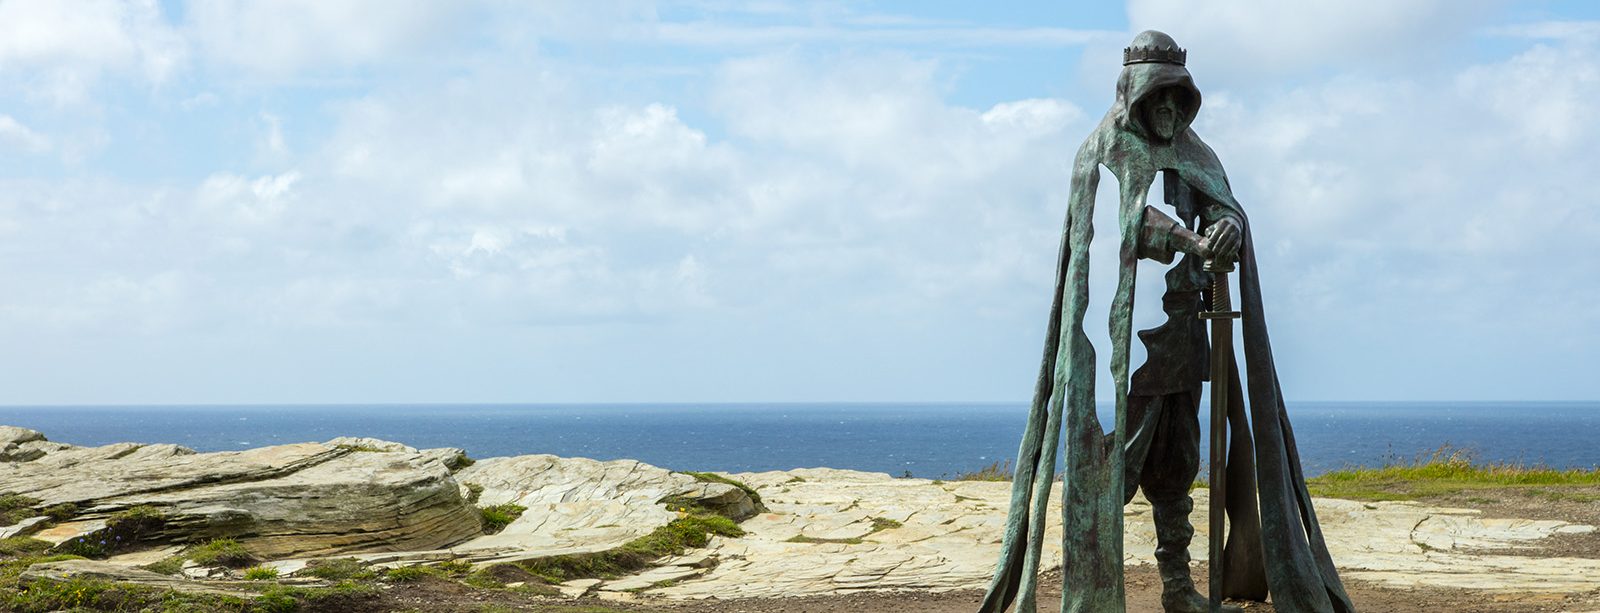 Tintagel statue of King Arthur